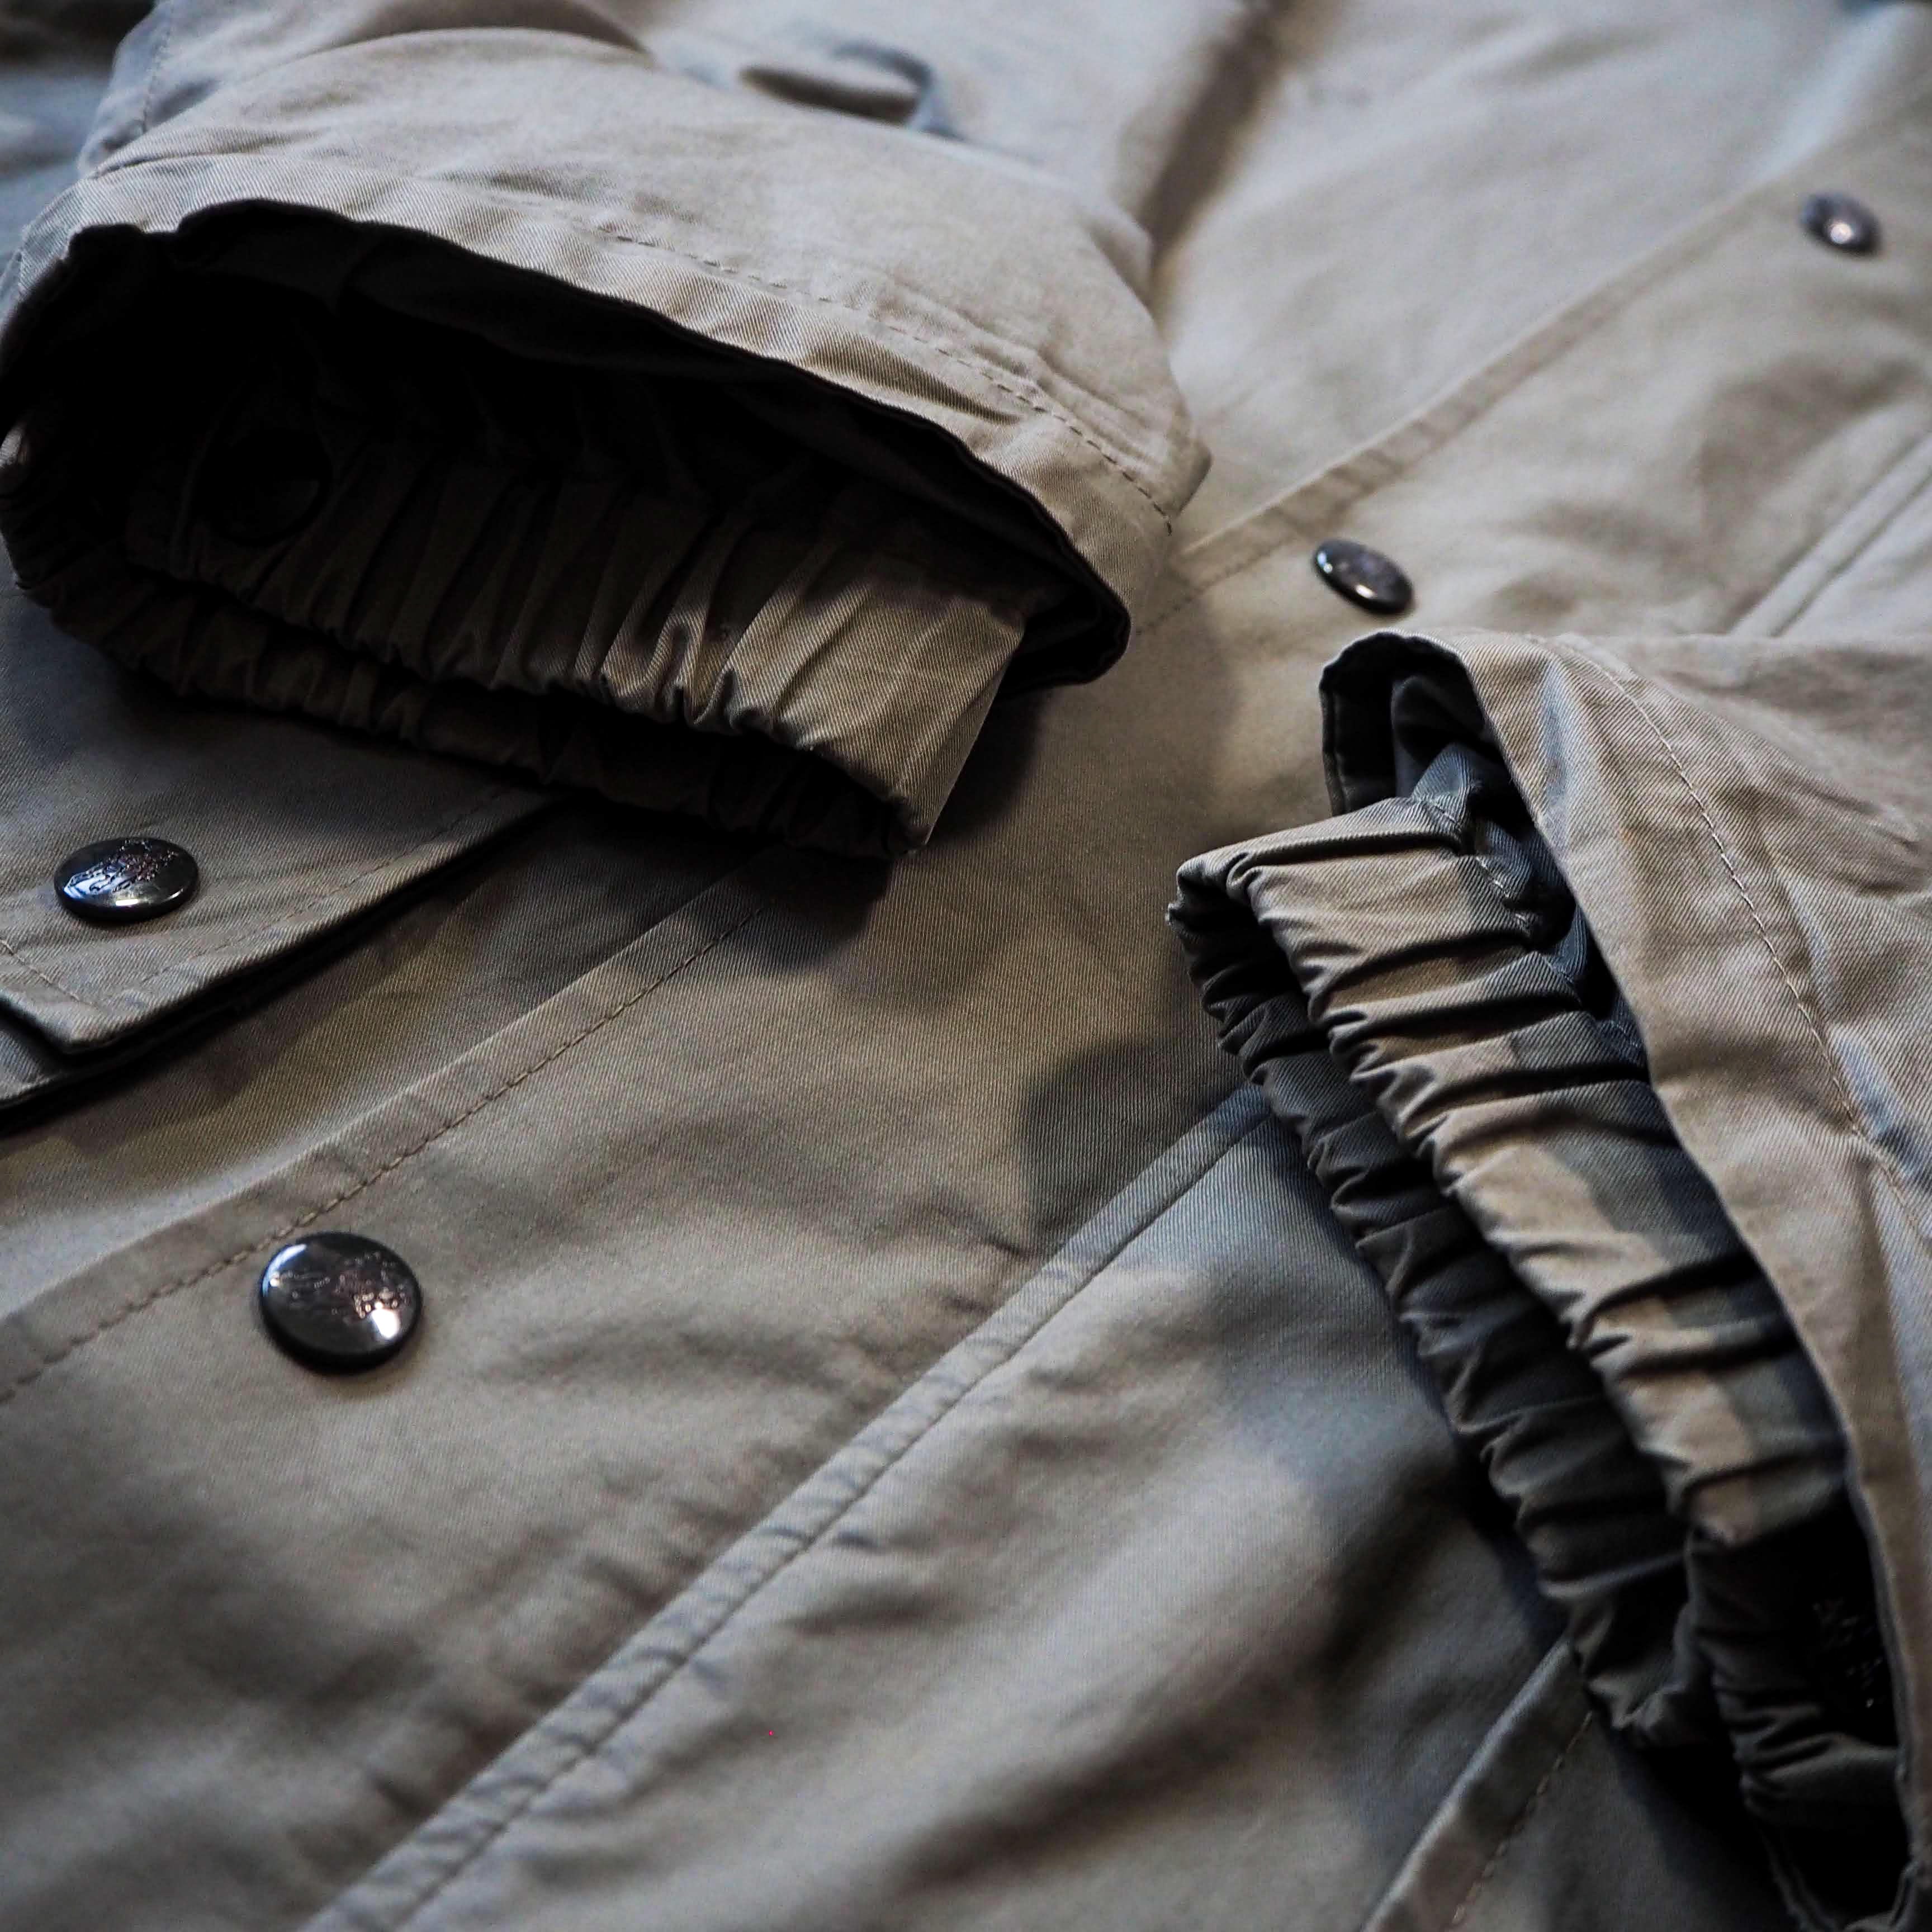 80s “BURBERRYS” 1枚袖 hunting jacket made in England 80年代 英国製